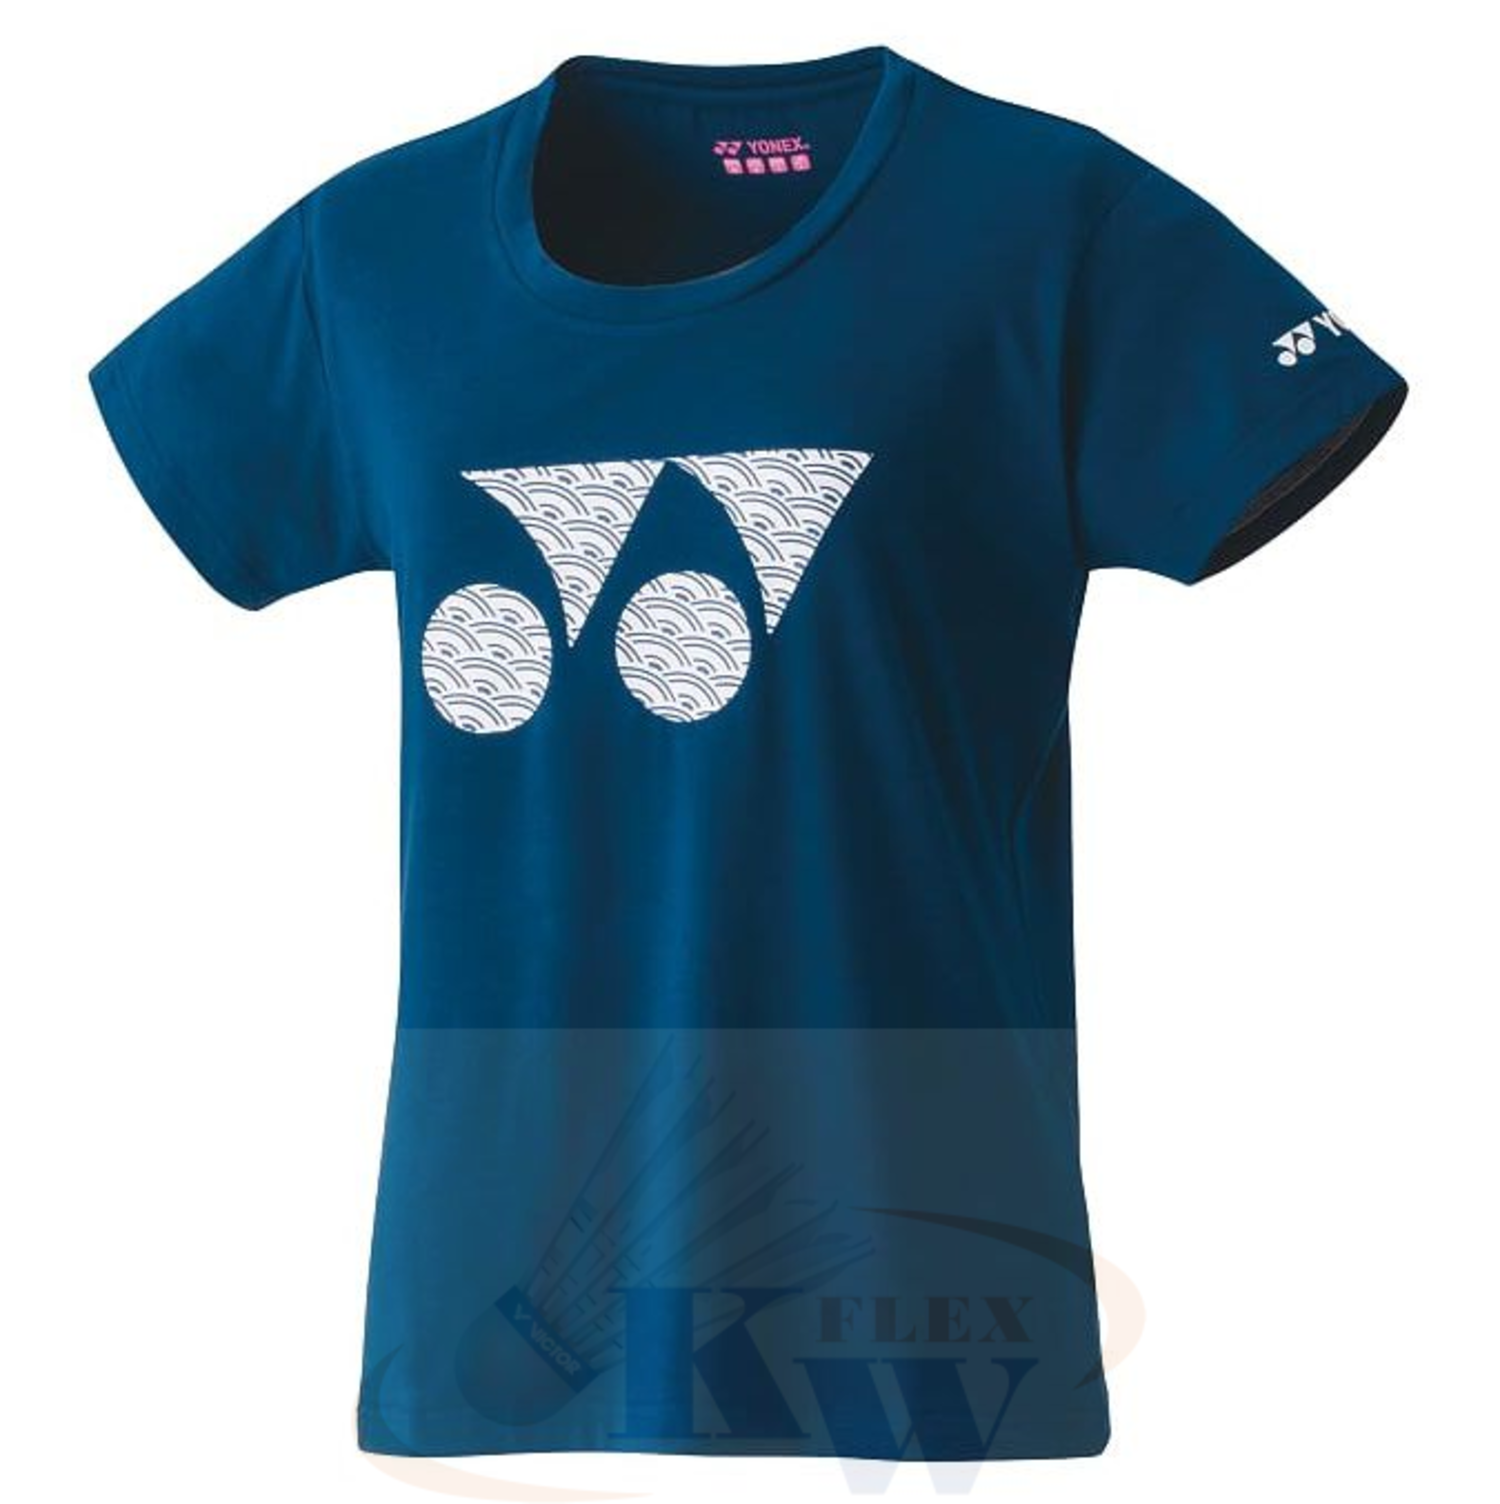 Yonex Woman's T-shirt 16461EX Indigo Blue - KW FLEX racket speciaalzaak